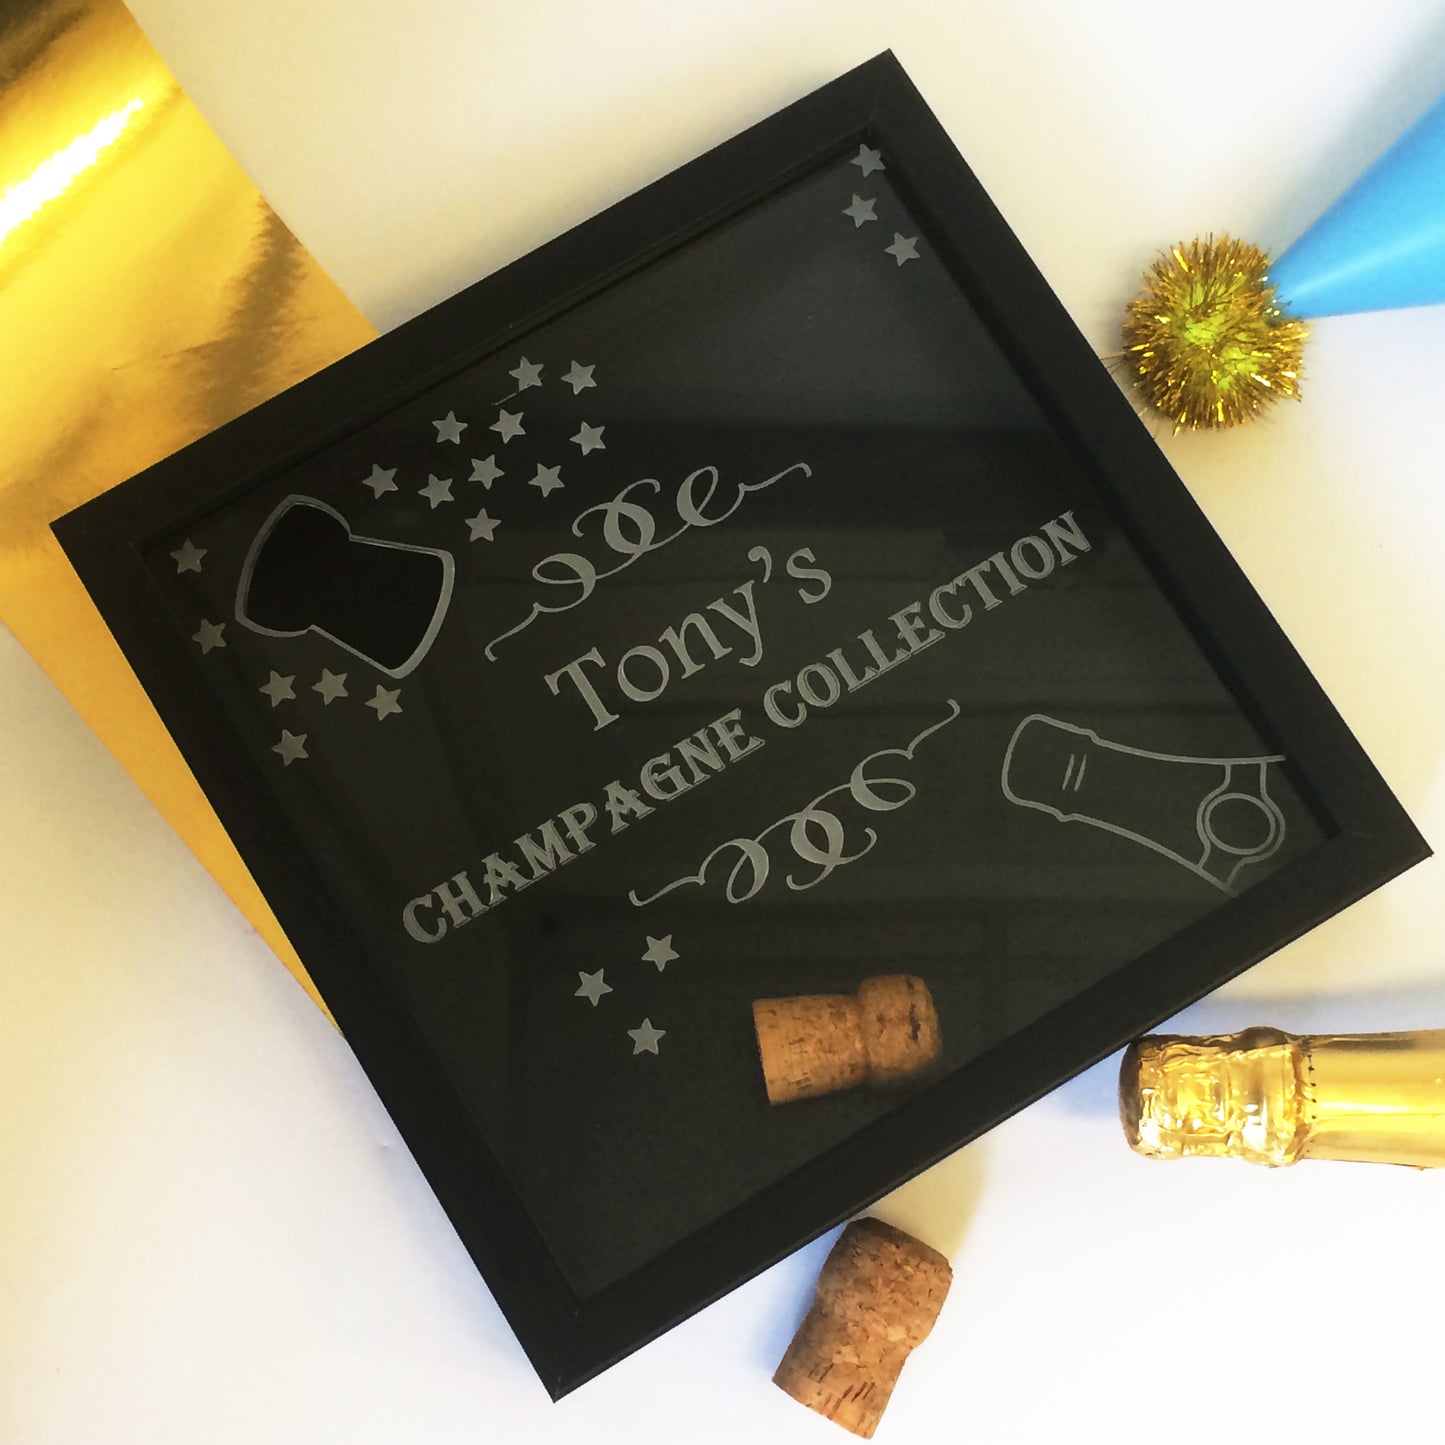 Champagne Cork Collection Box